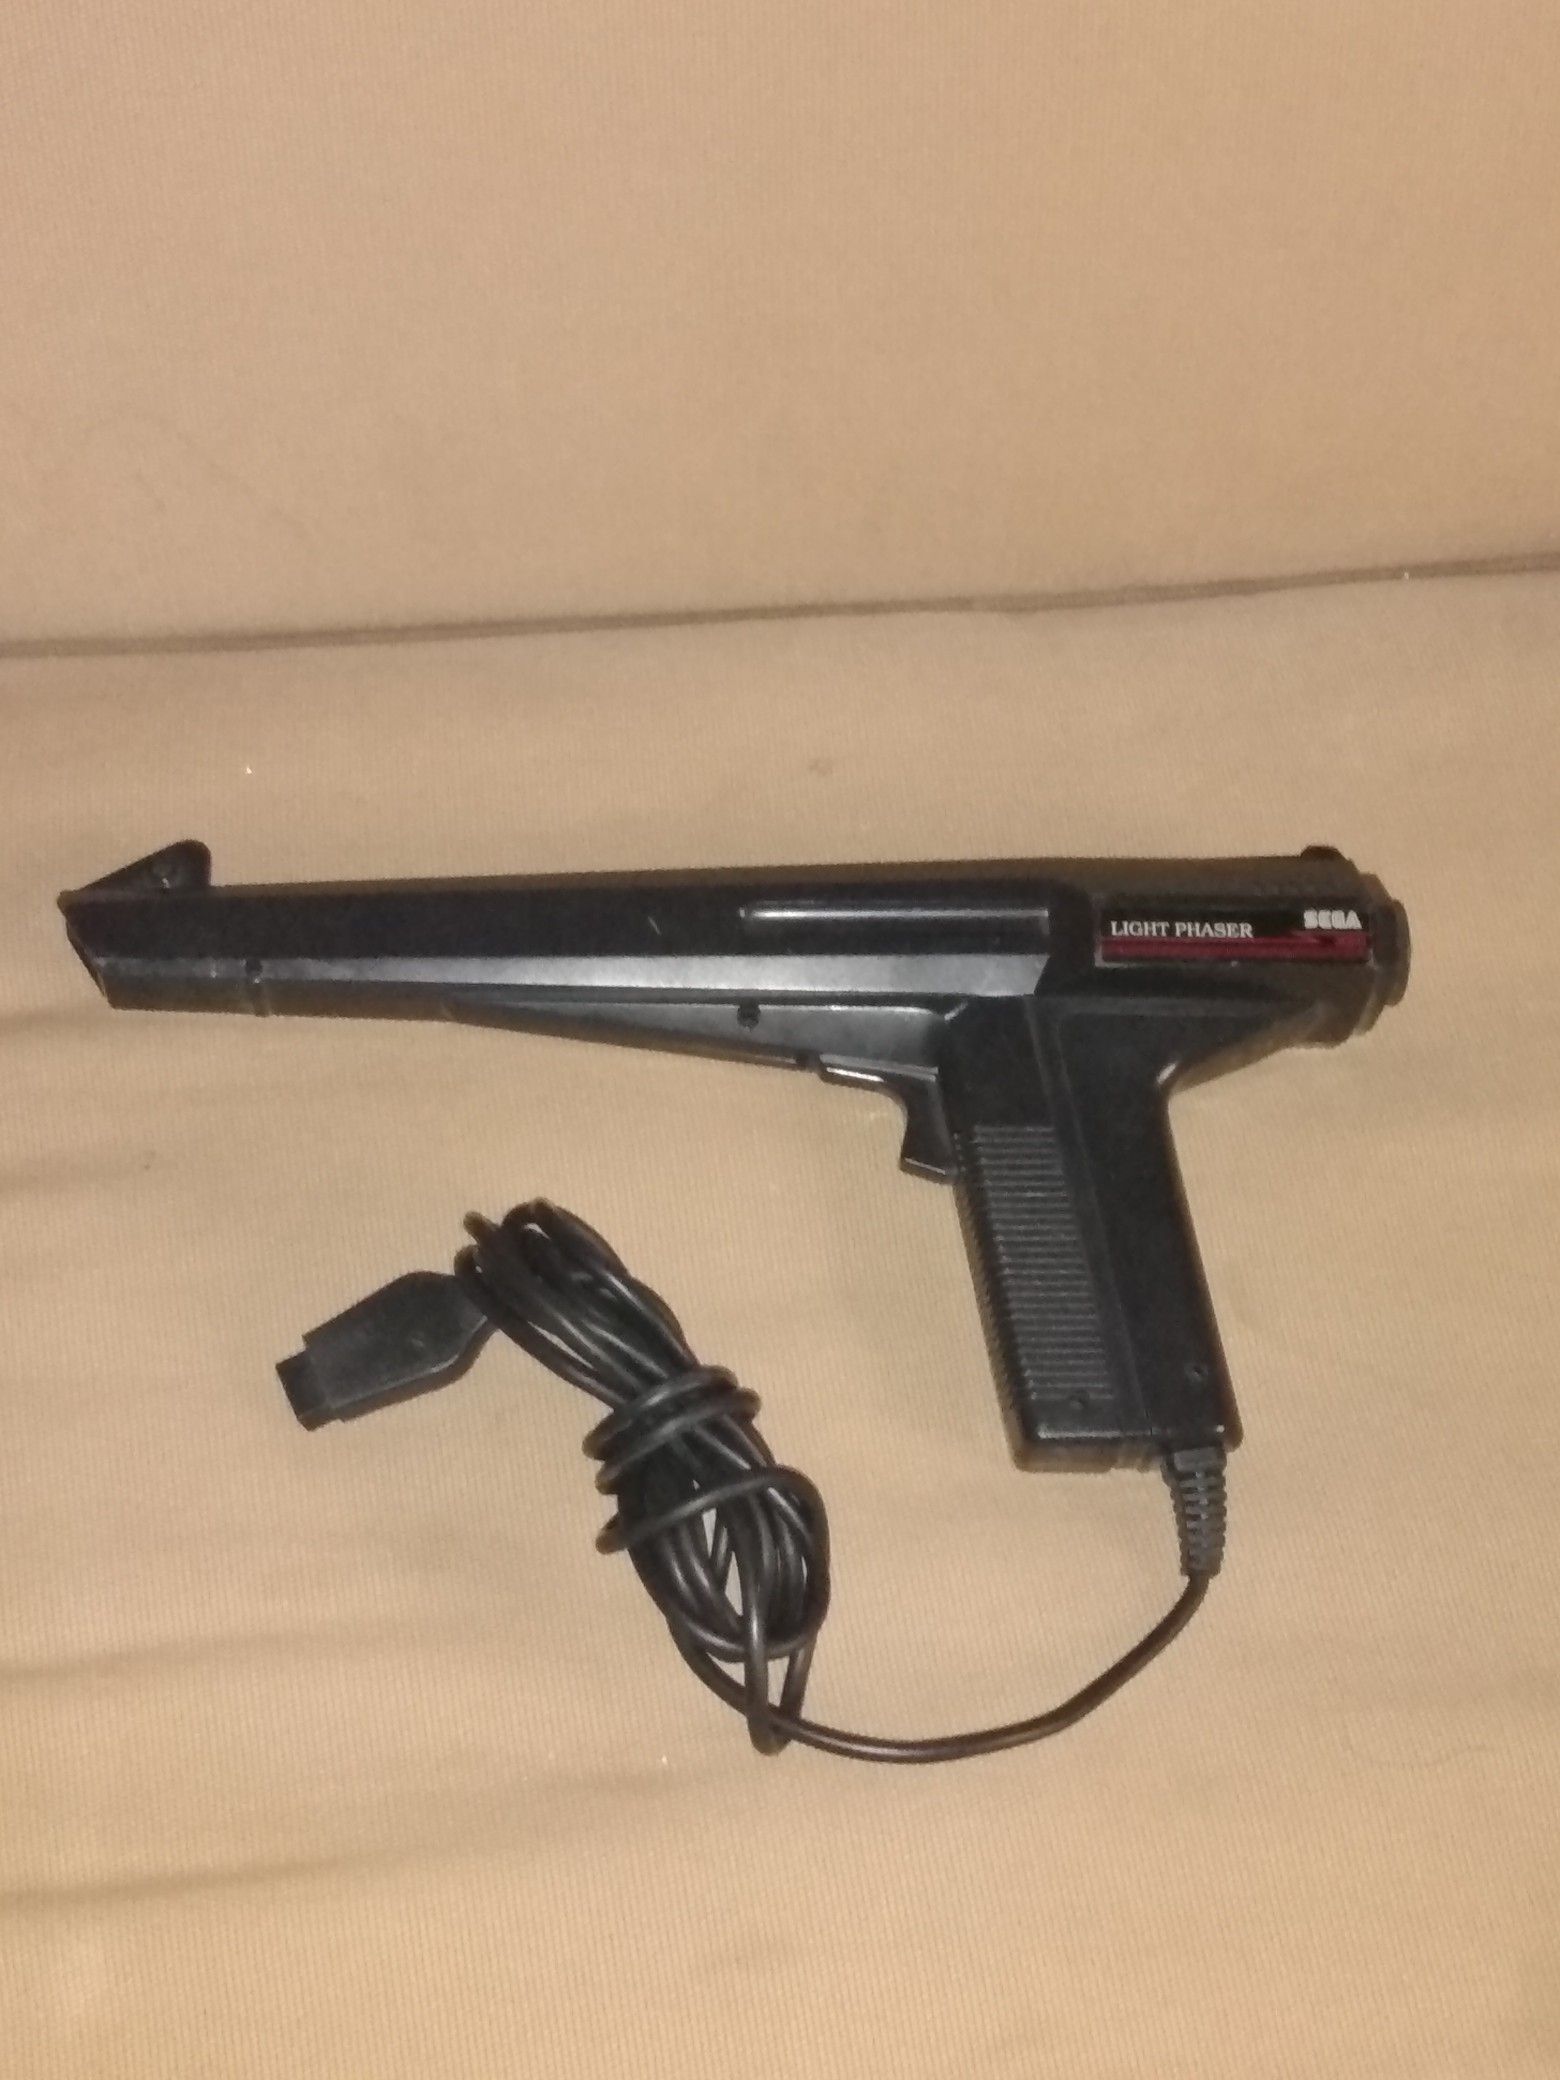 Sega masters light phaser gun control 3050